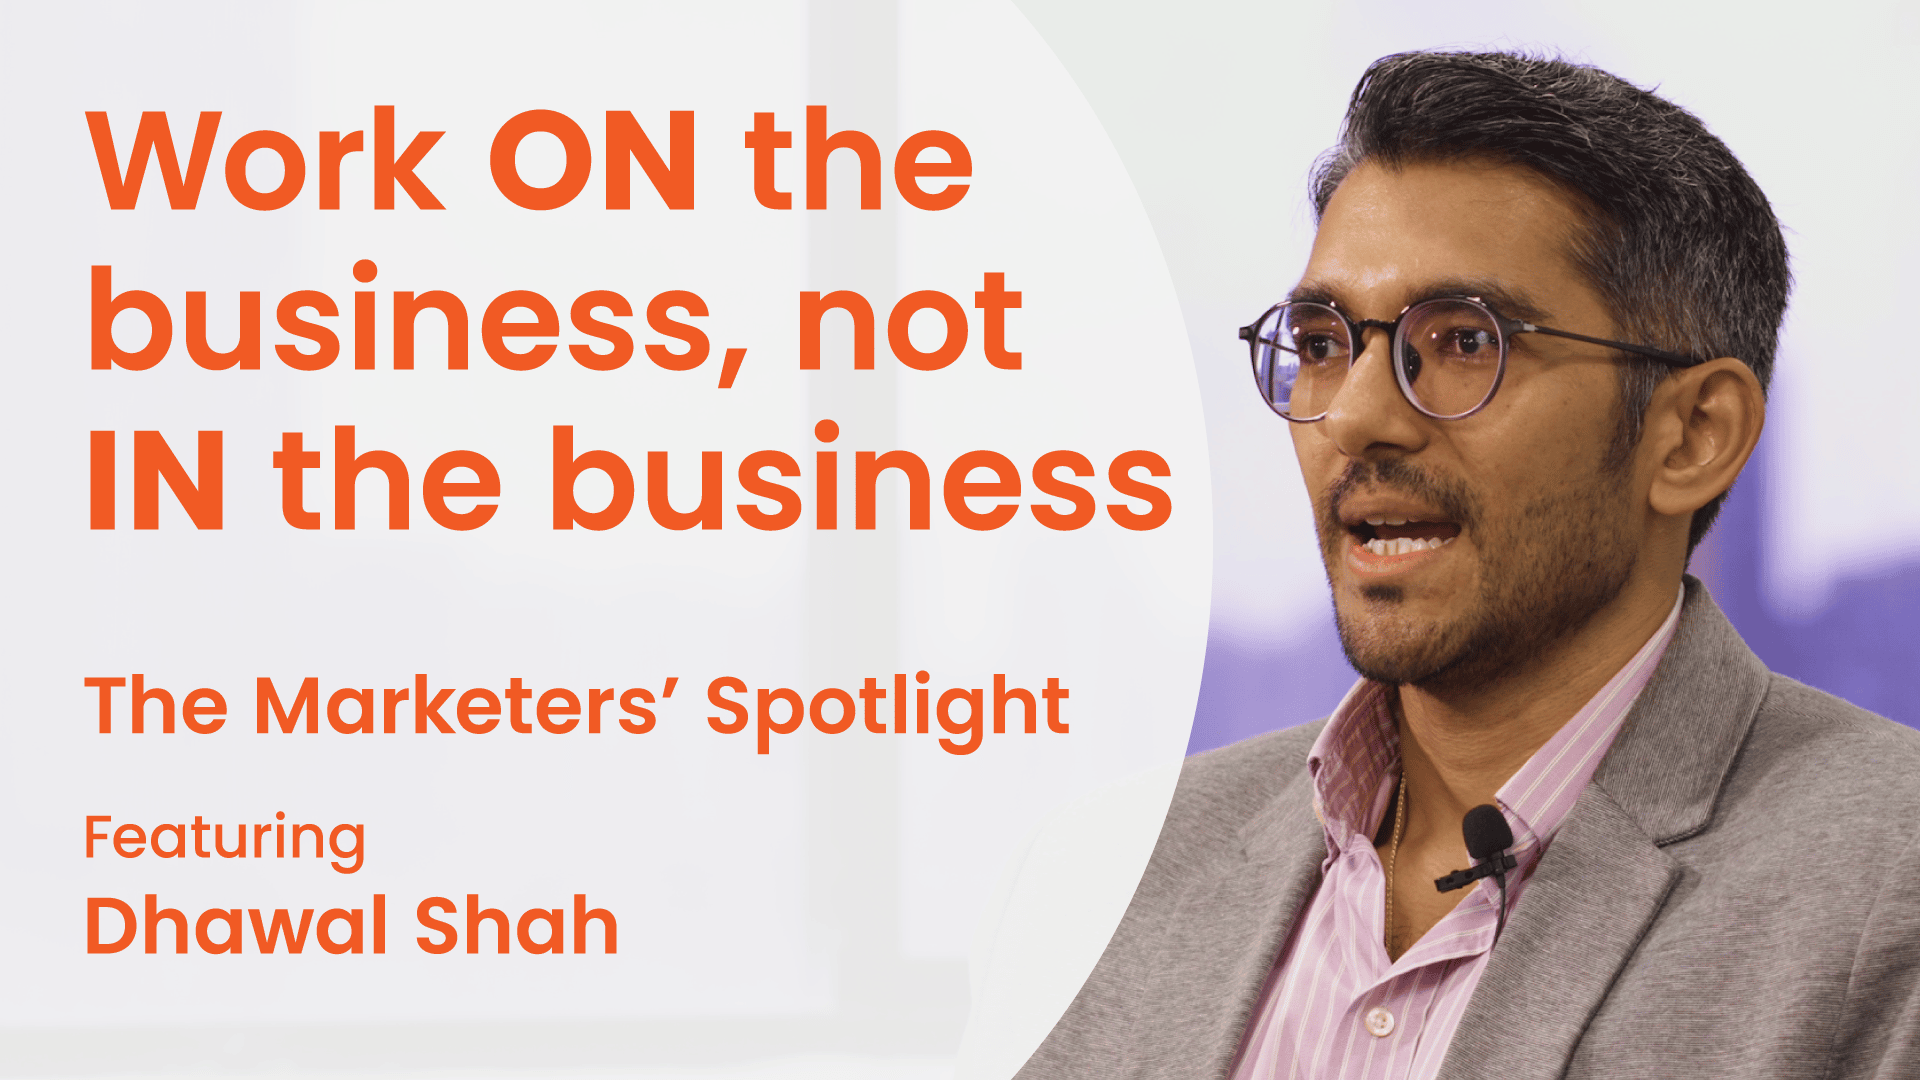 The Marketer's Spotlight - Dhawal Shah